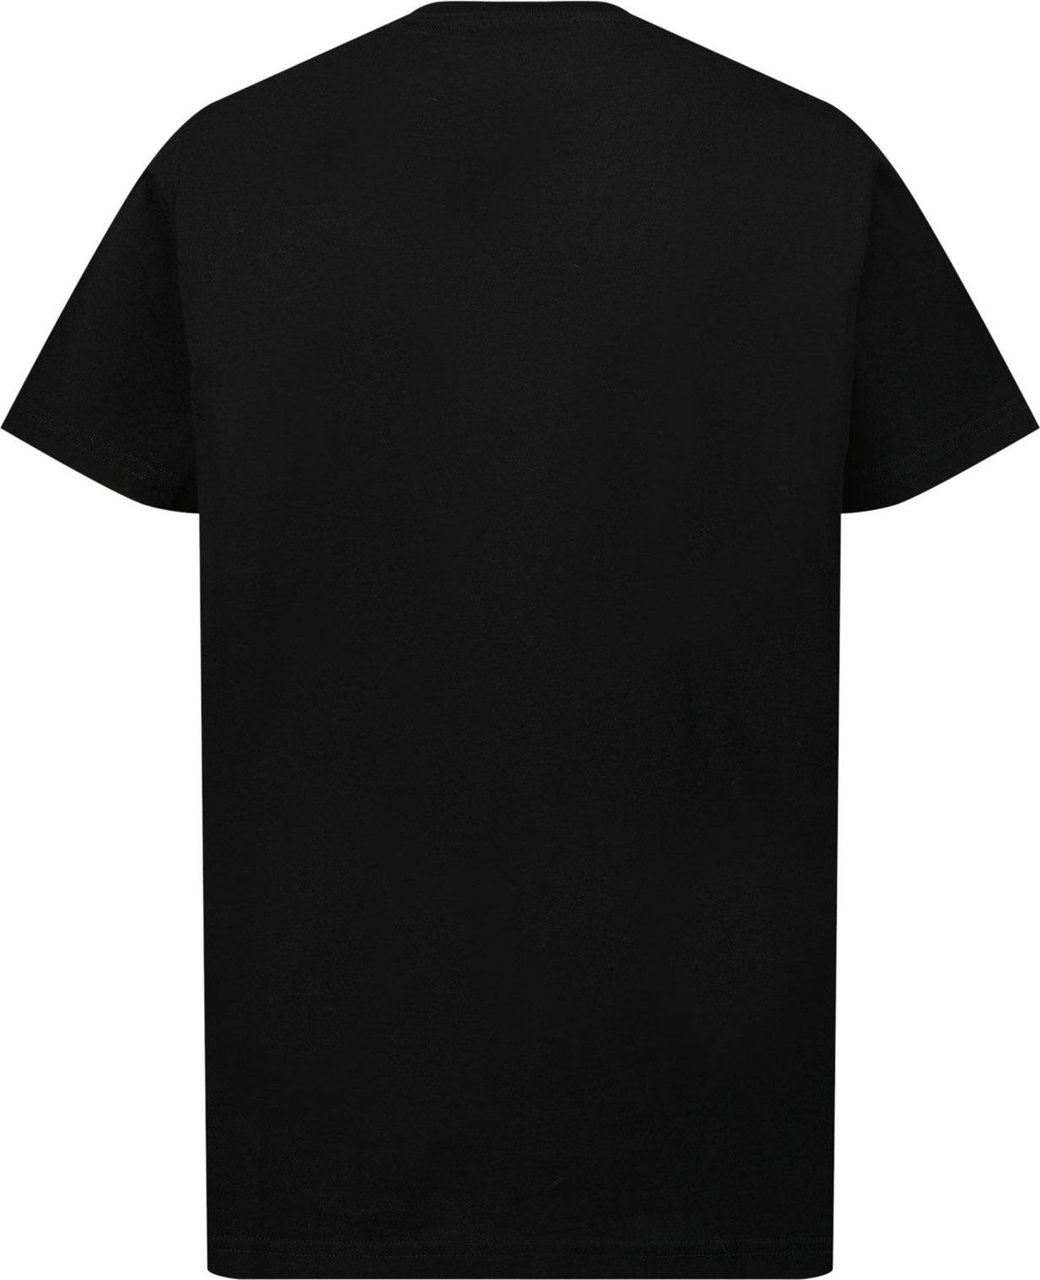 Dsquared2 Dsquared2 DQ0513 kinder t-shirt zwart Zwart